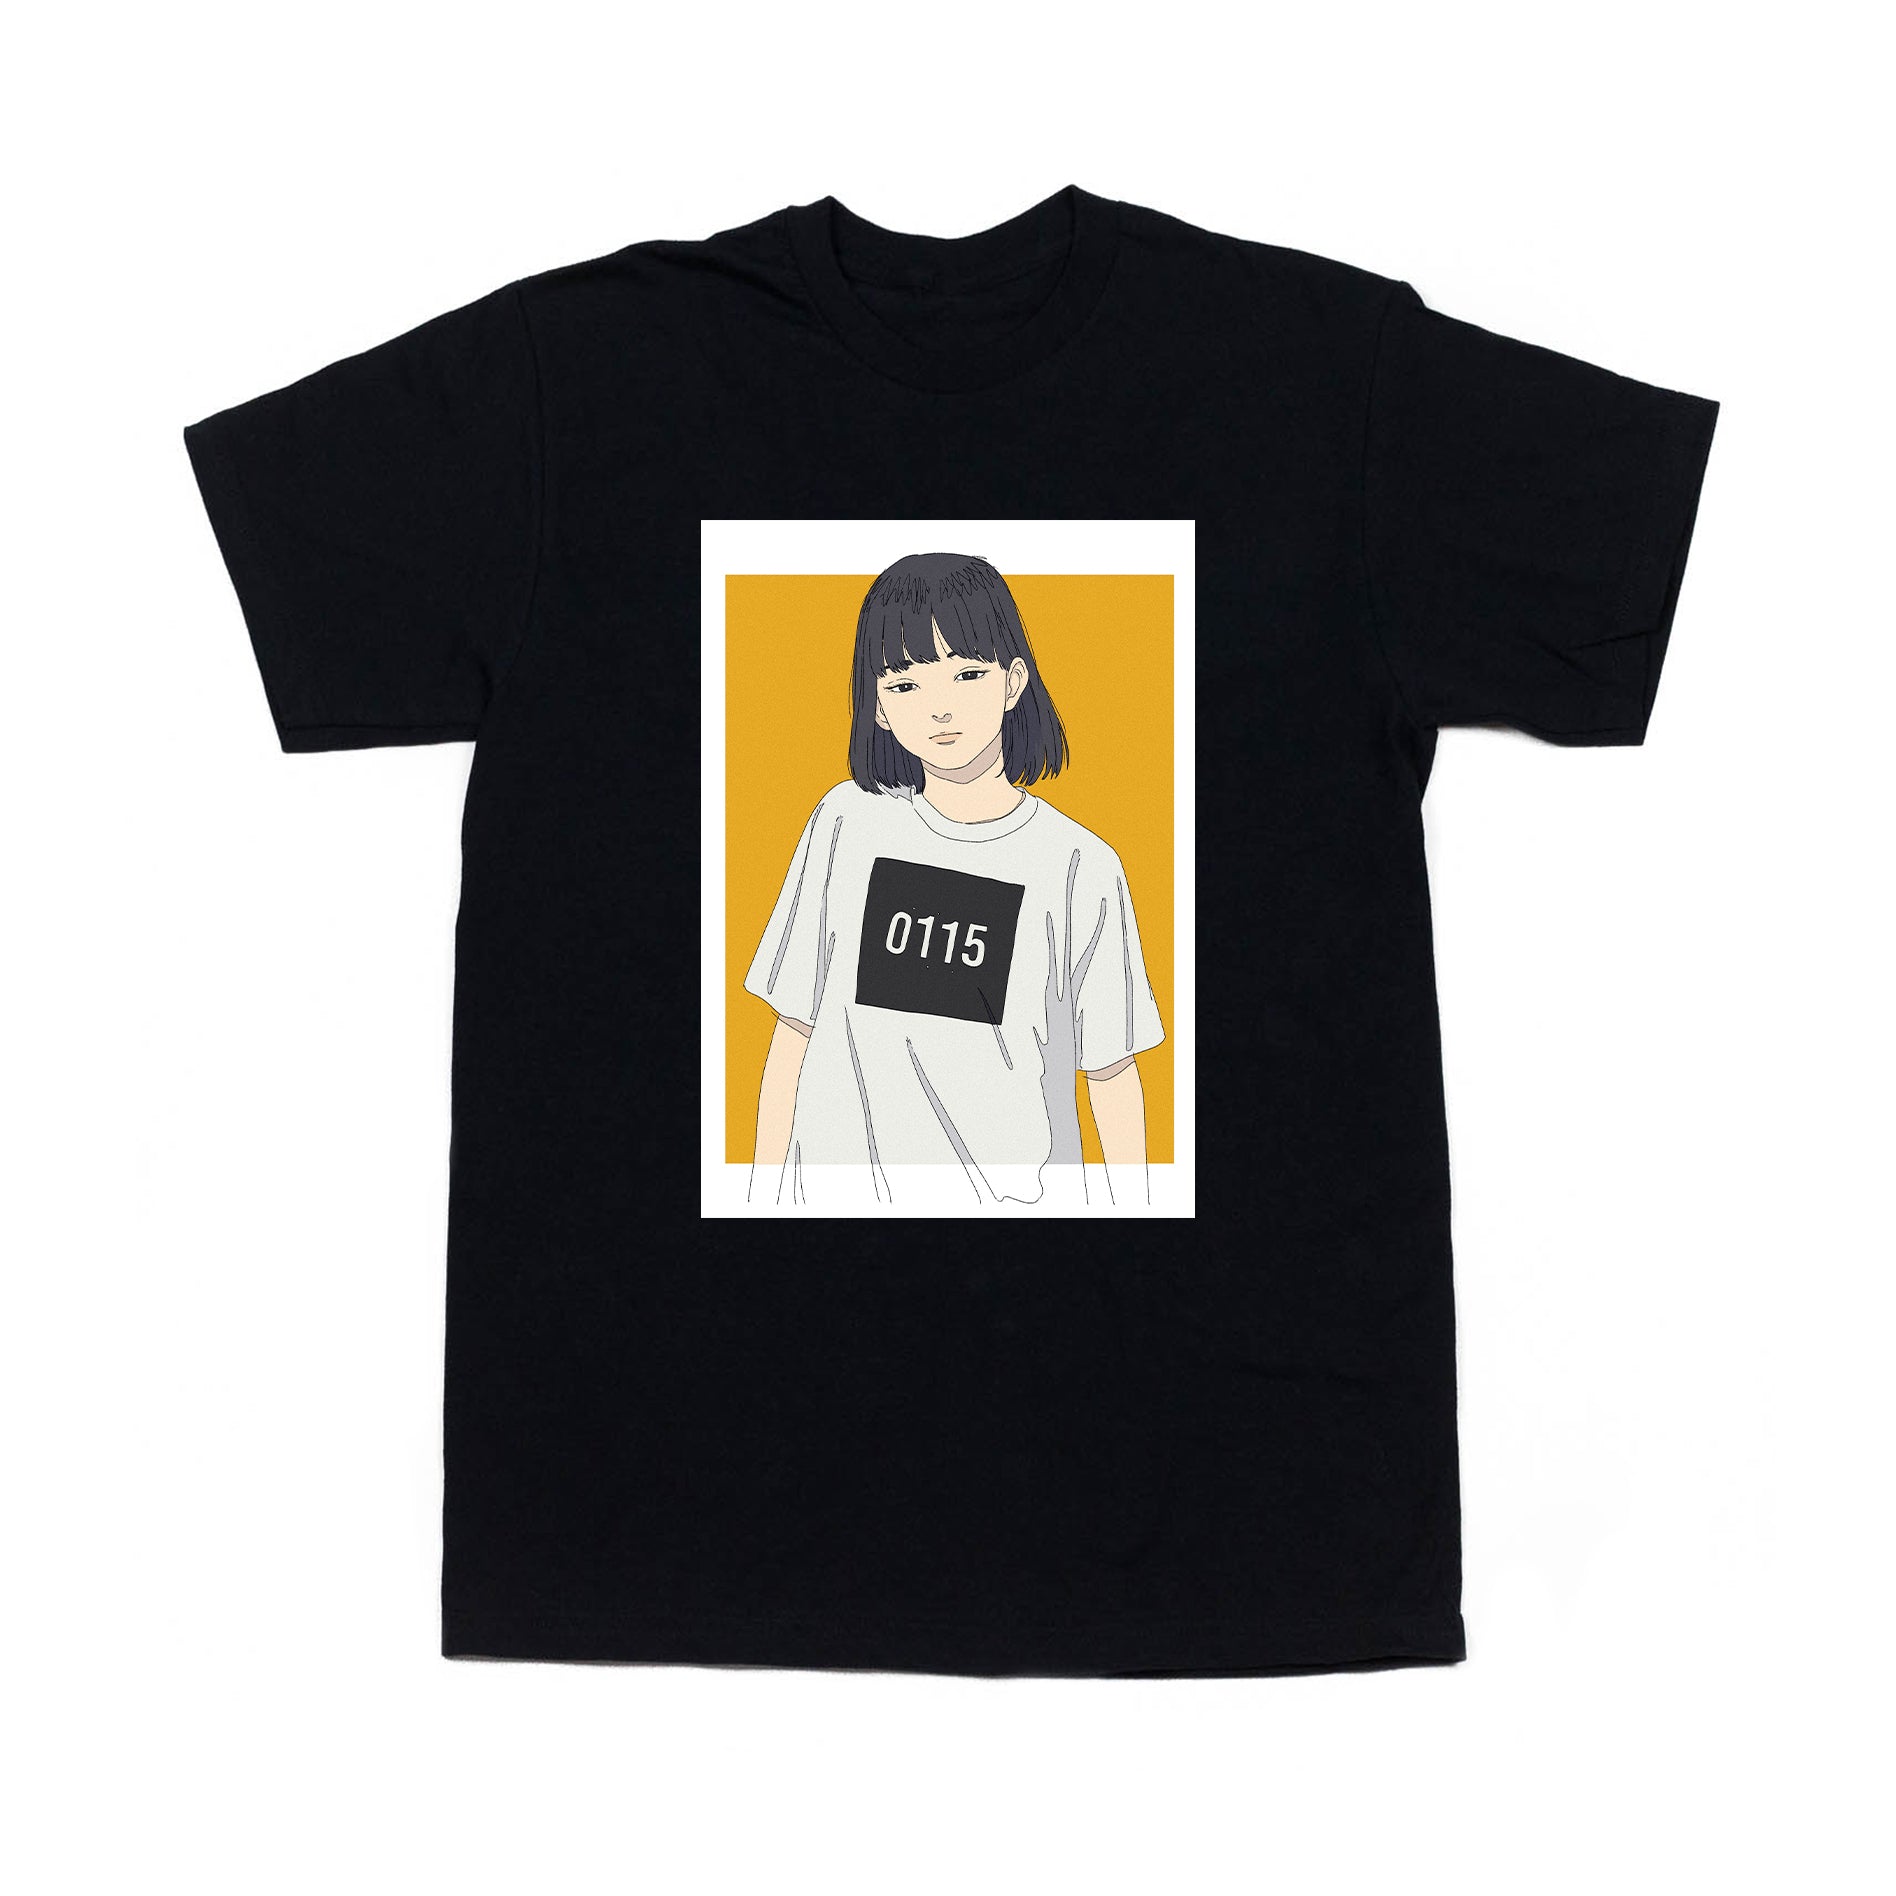 0115 Records - T-Shirts - 0115 x Villageworks 001 T-shirt (Black)